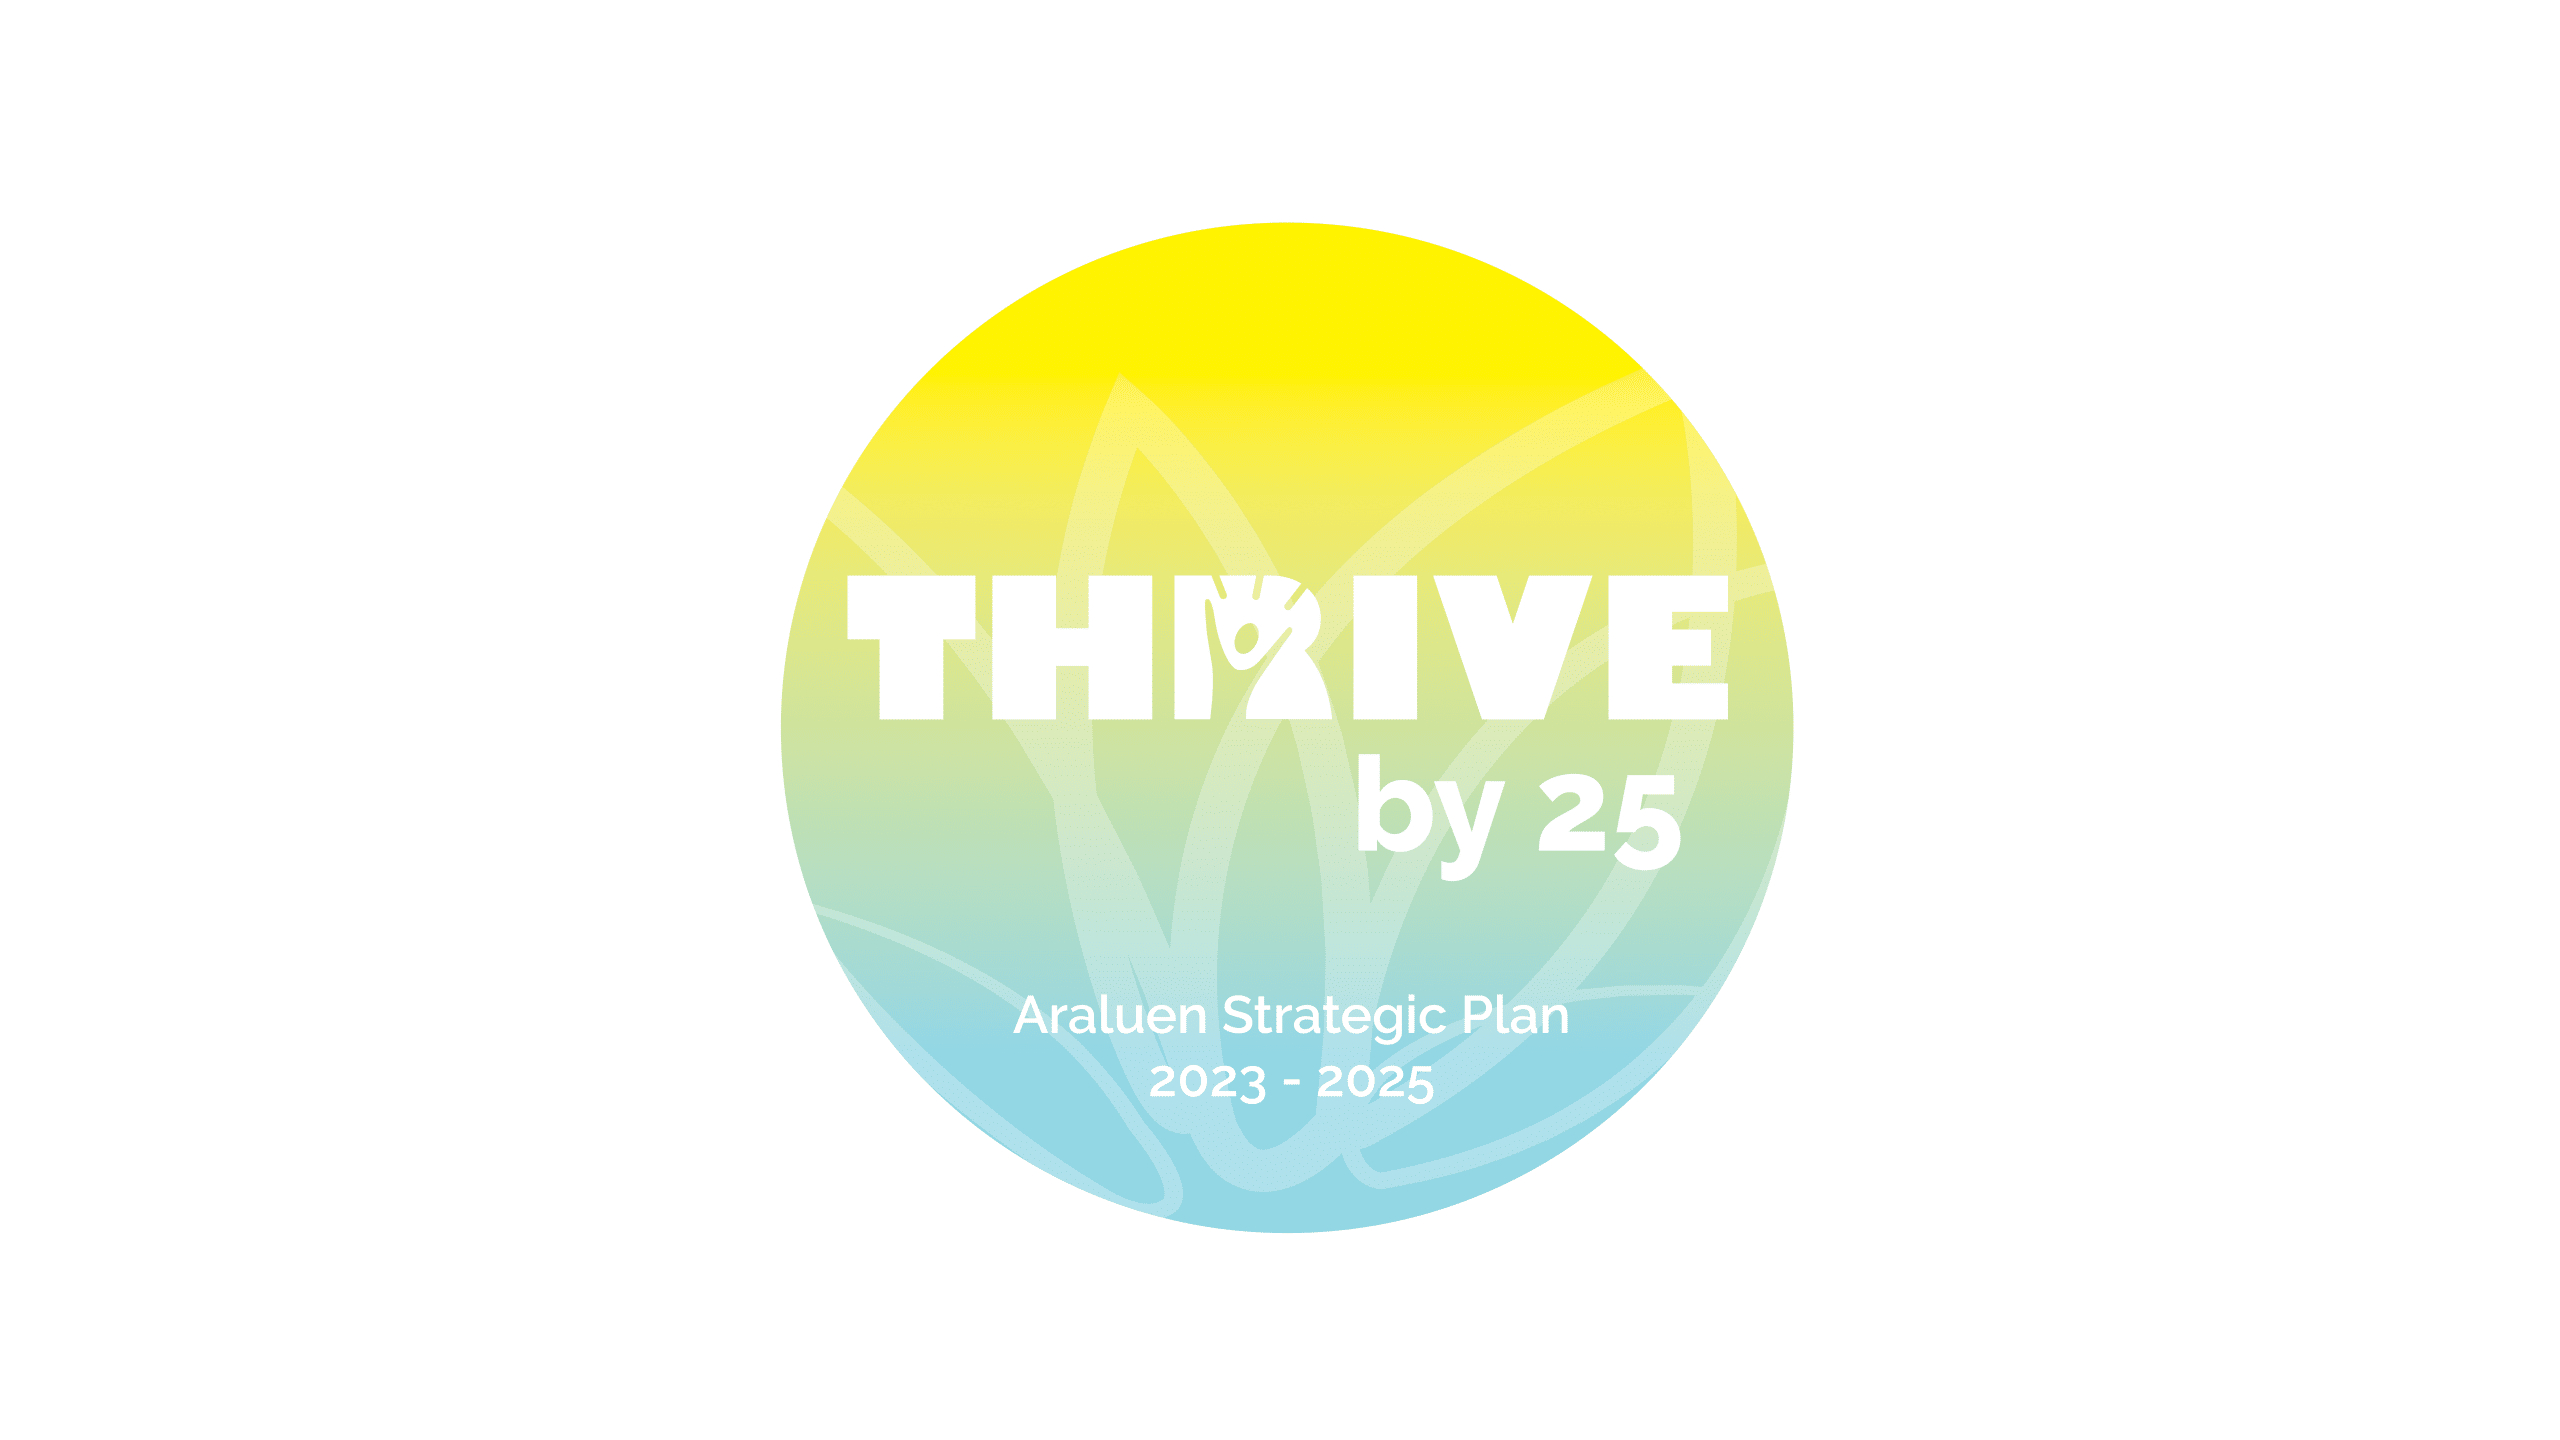 Thrive by 25 logo of Araluen Strategic Plan 2023 - 2025